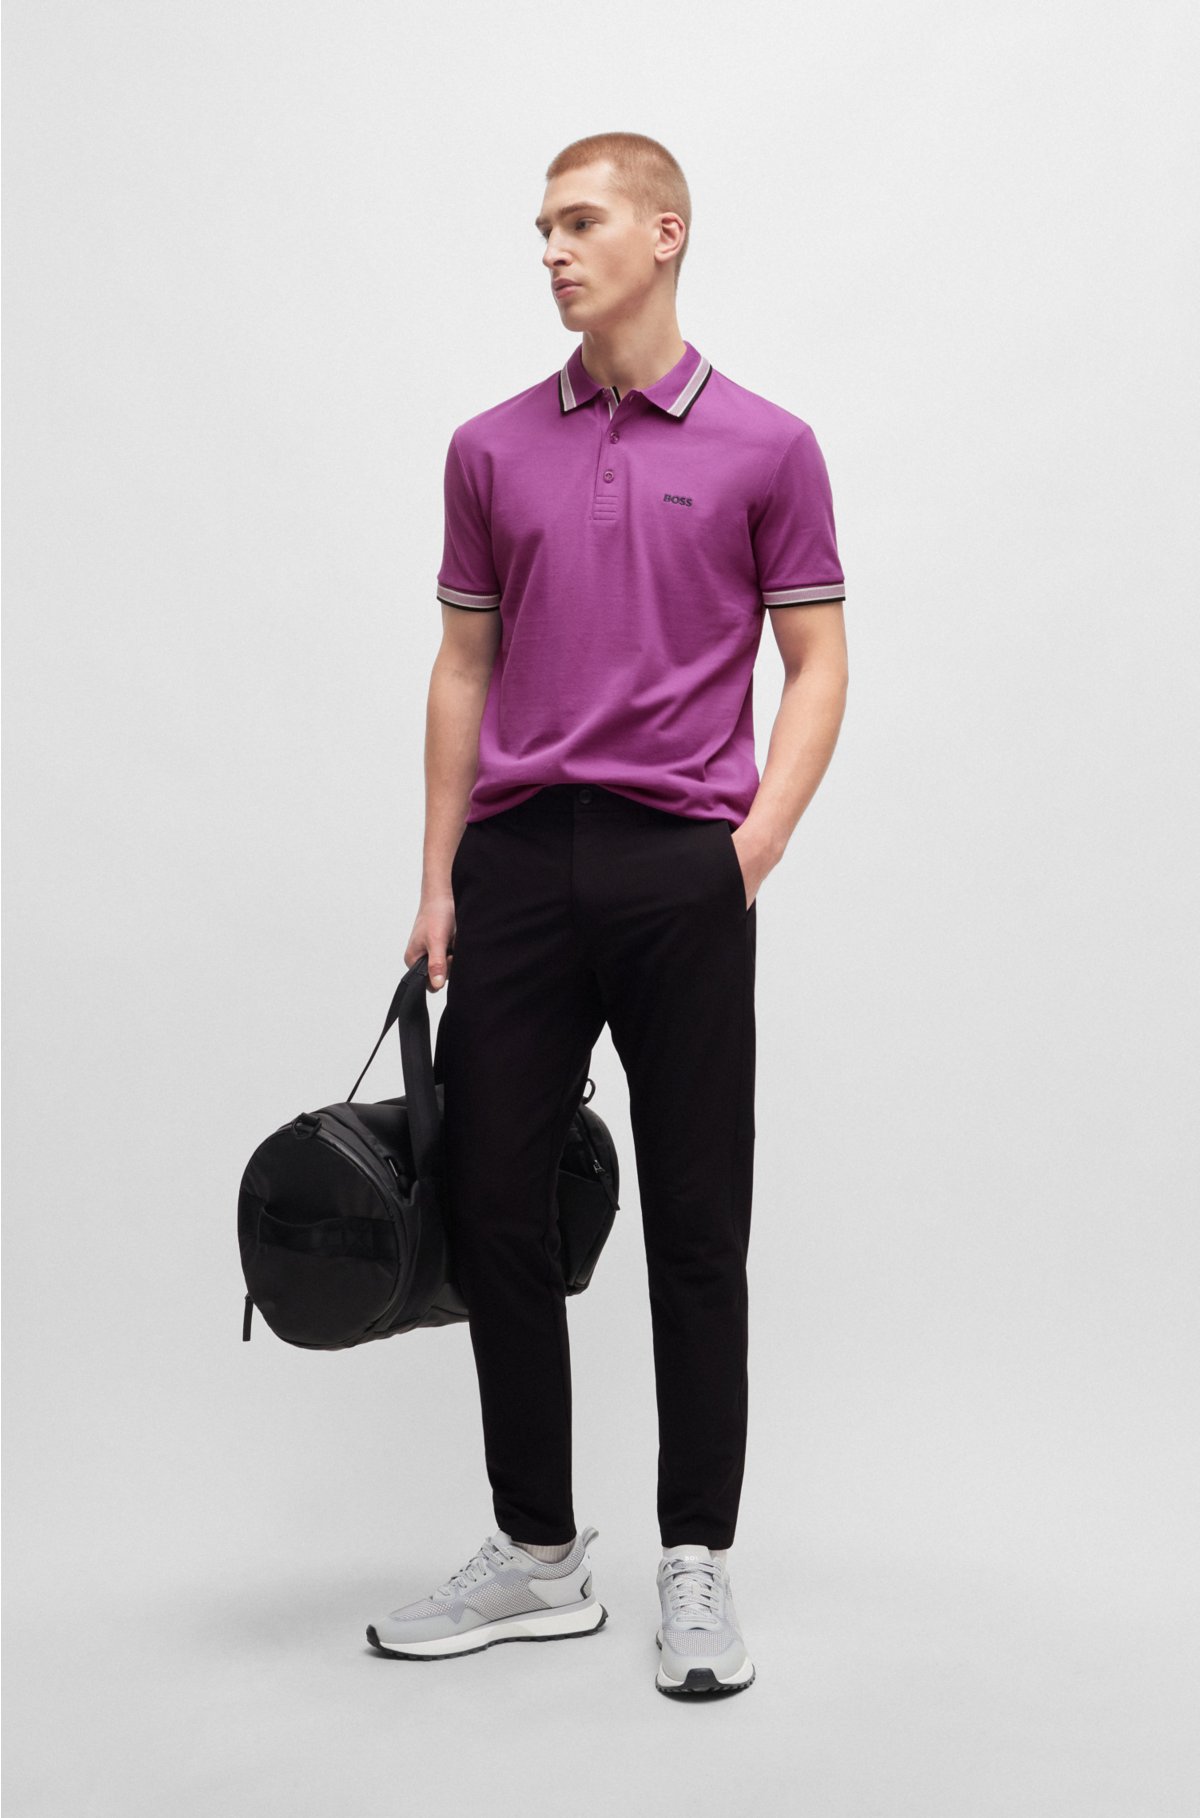 Cotton-piqué polo shirt with contrast logo, Purple